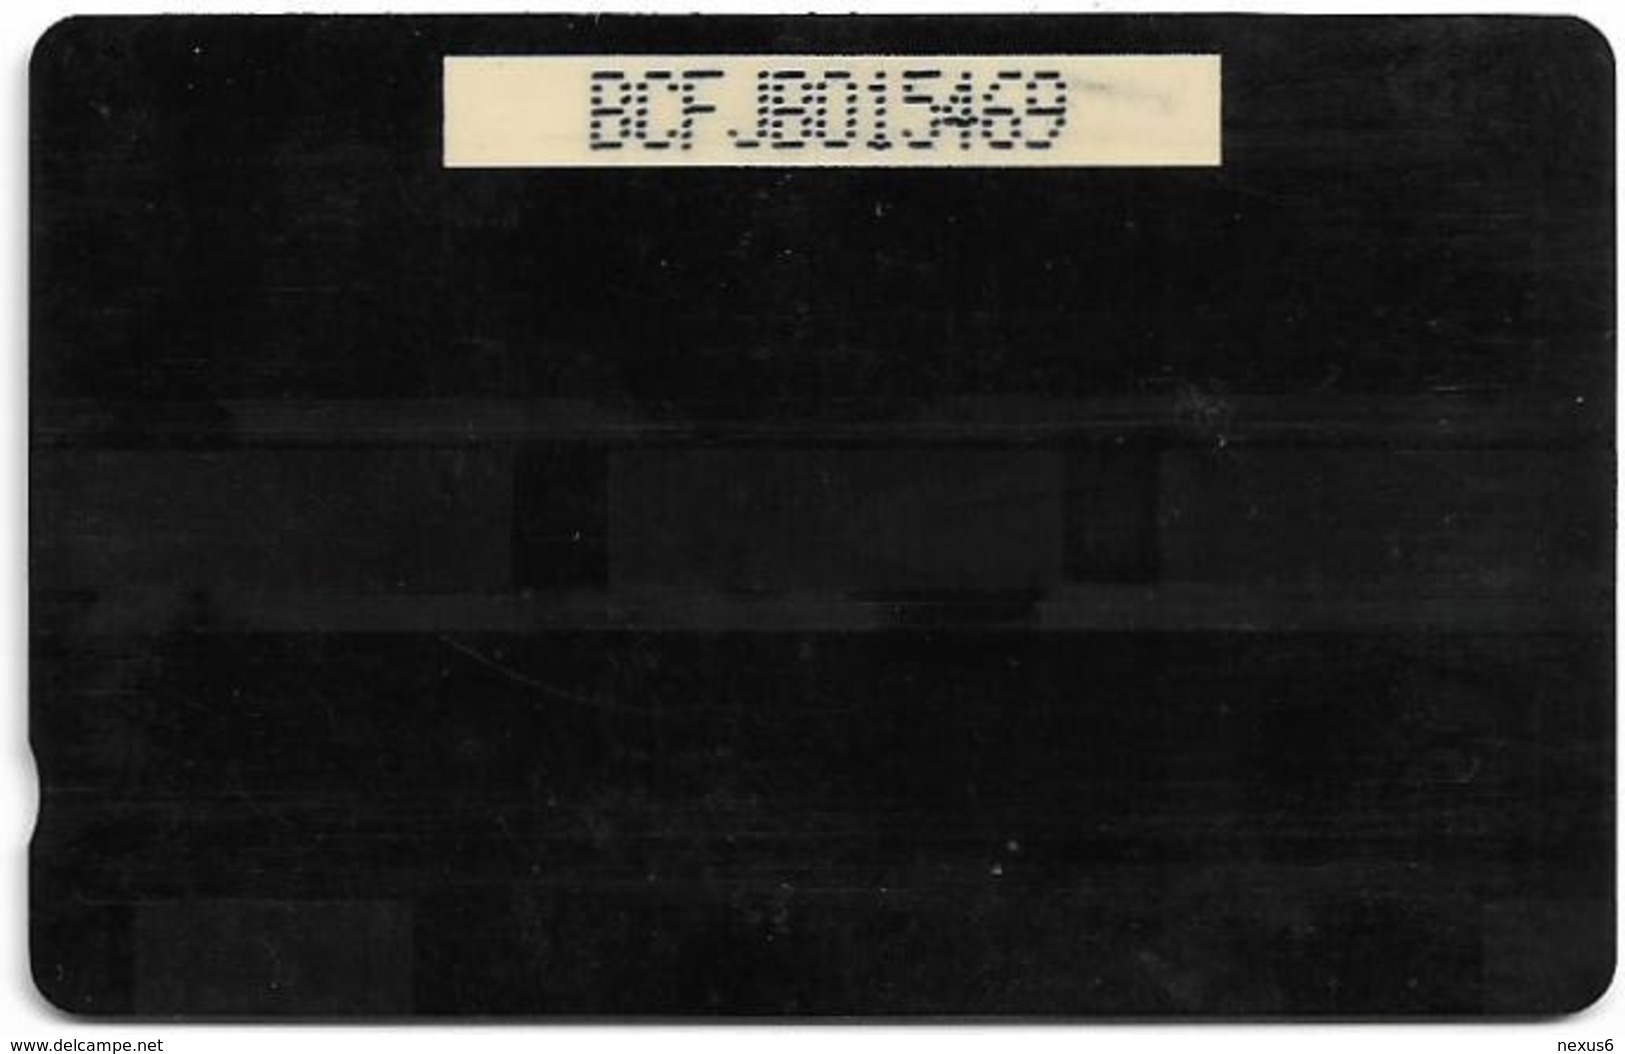 Fiji - Tel. Fiji - Emergency Issue - White Card - FCFJB (White Stripe), 1994, 3$, 100ex, Used 5R - Fidji